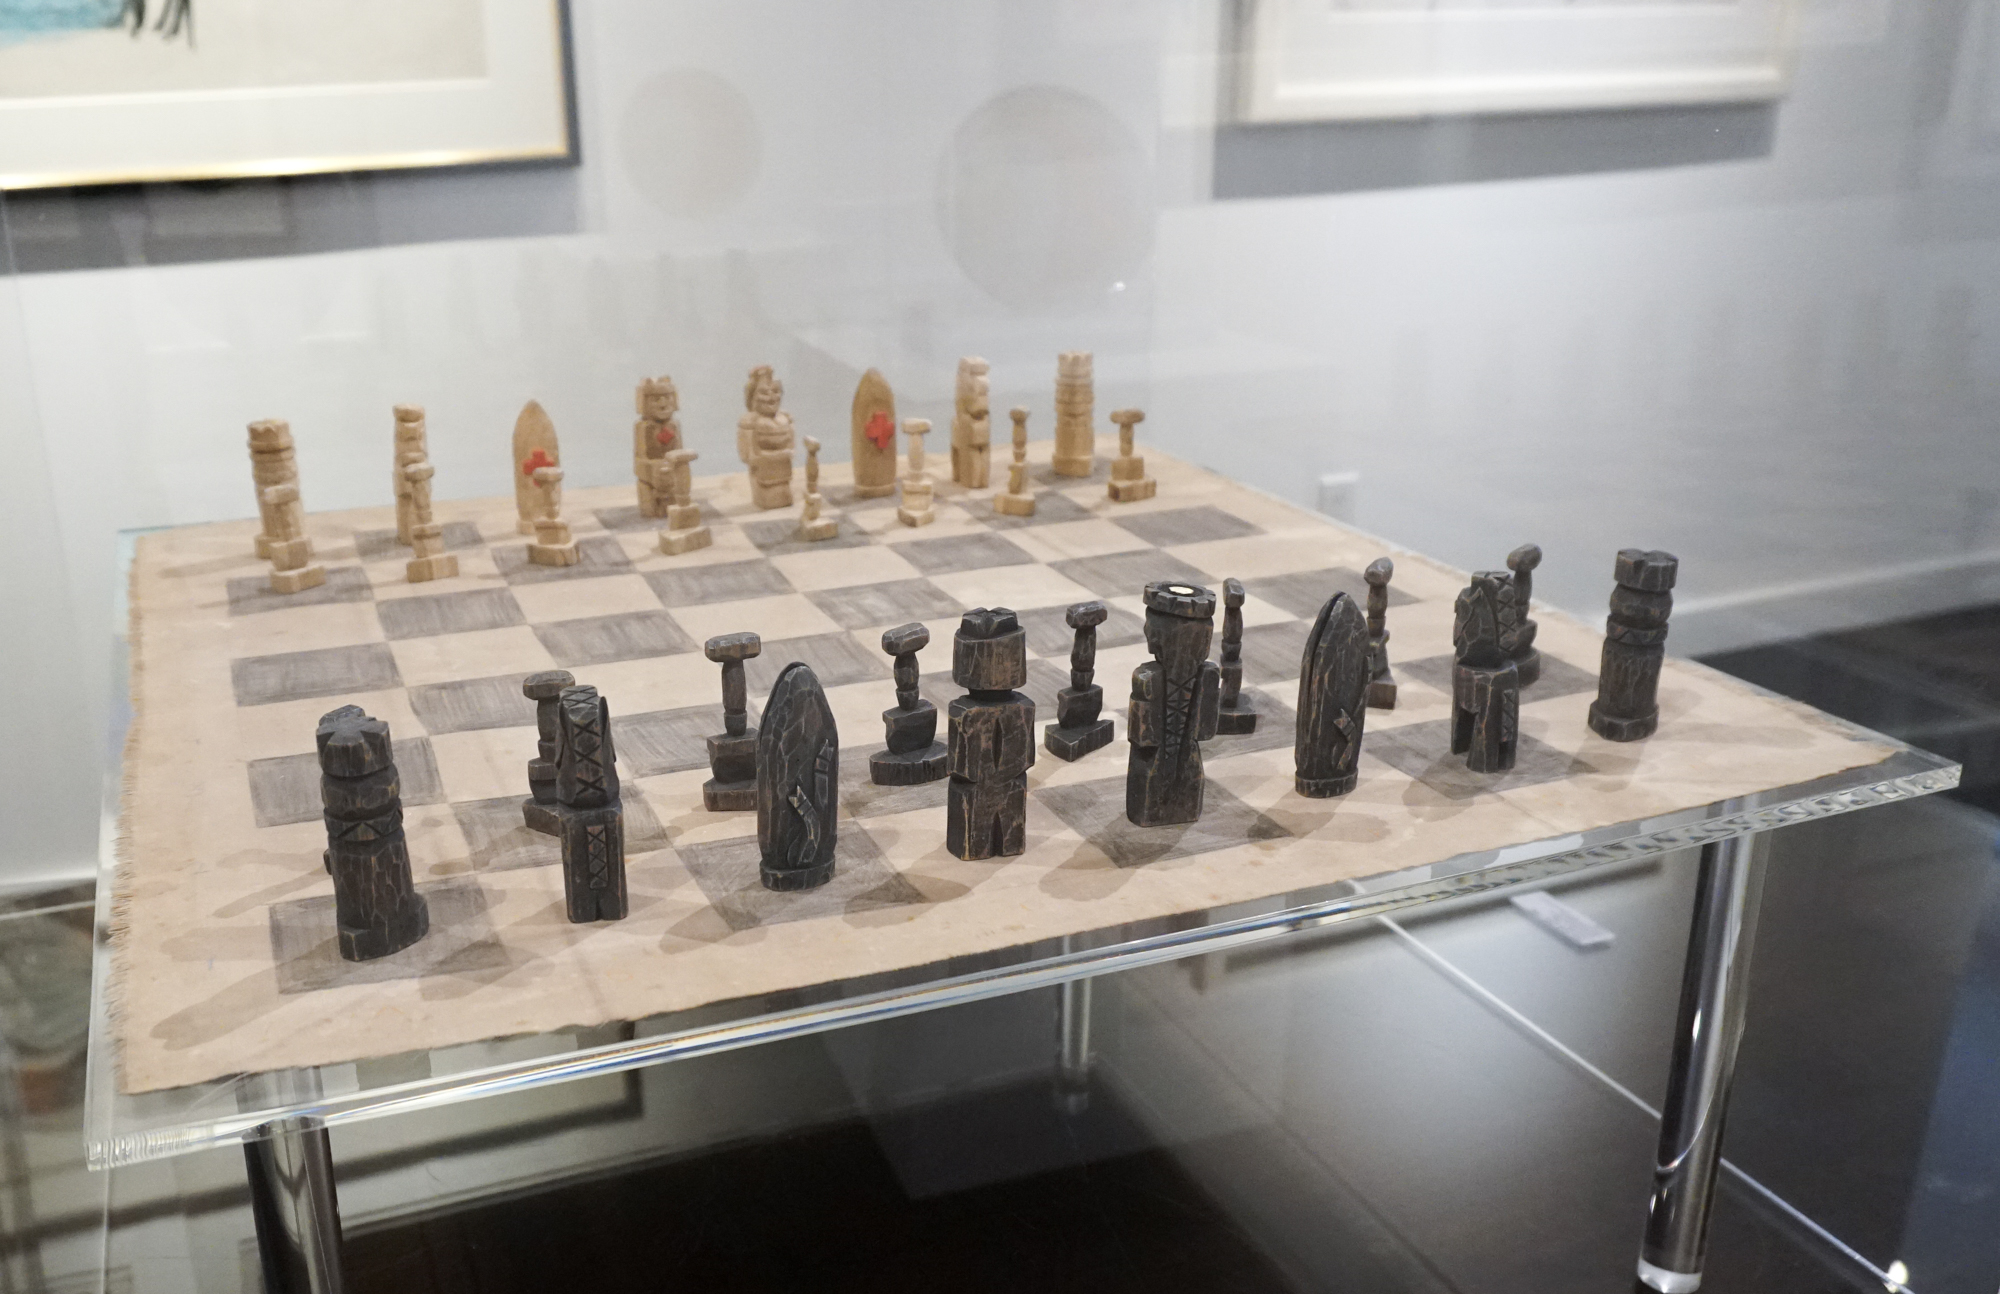 Featured image for “Oscar Cahén’s Chess Set”